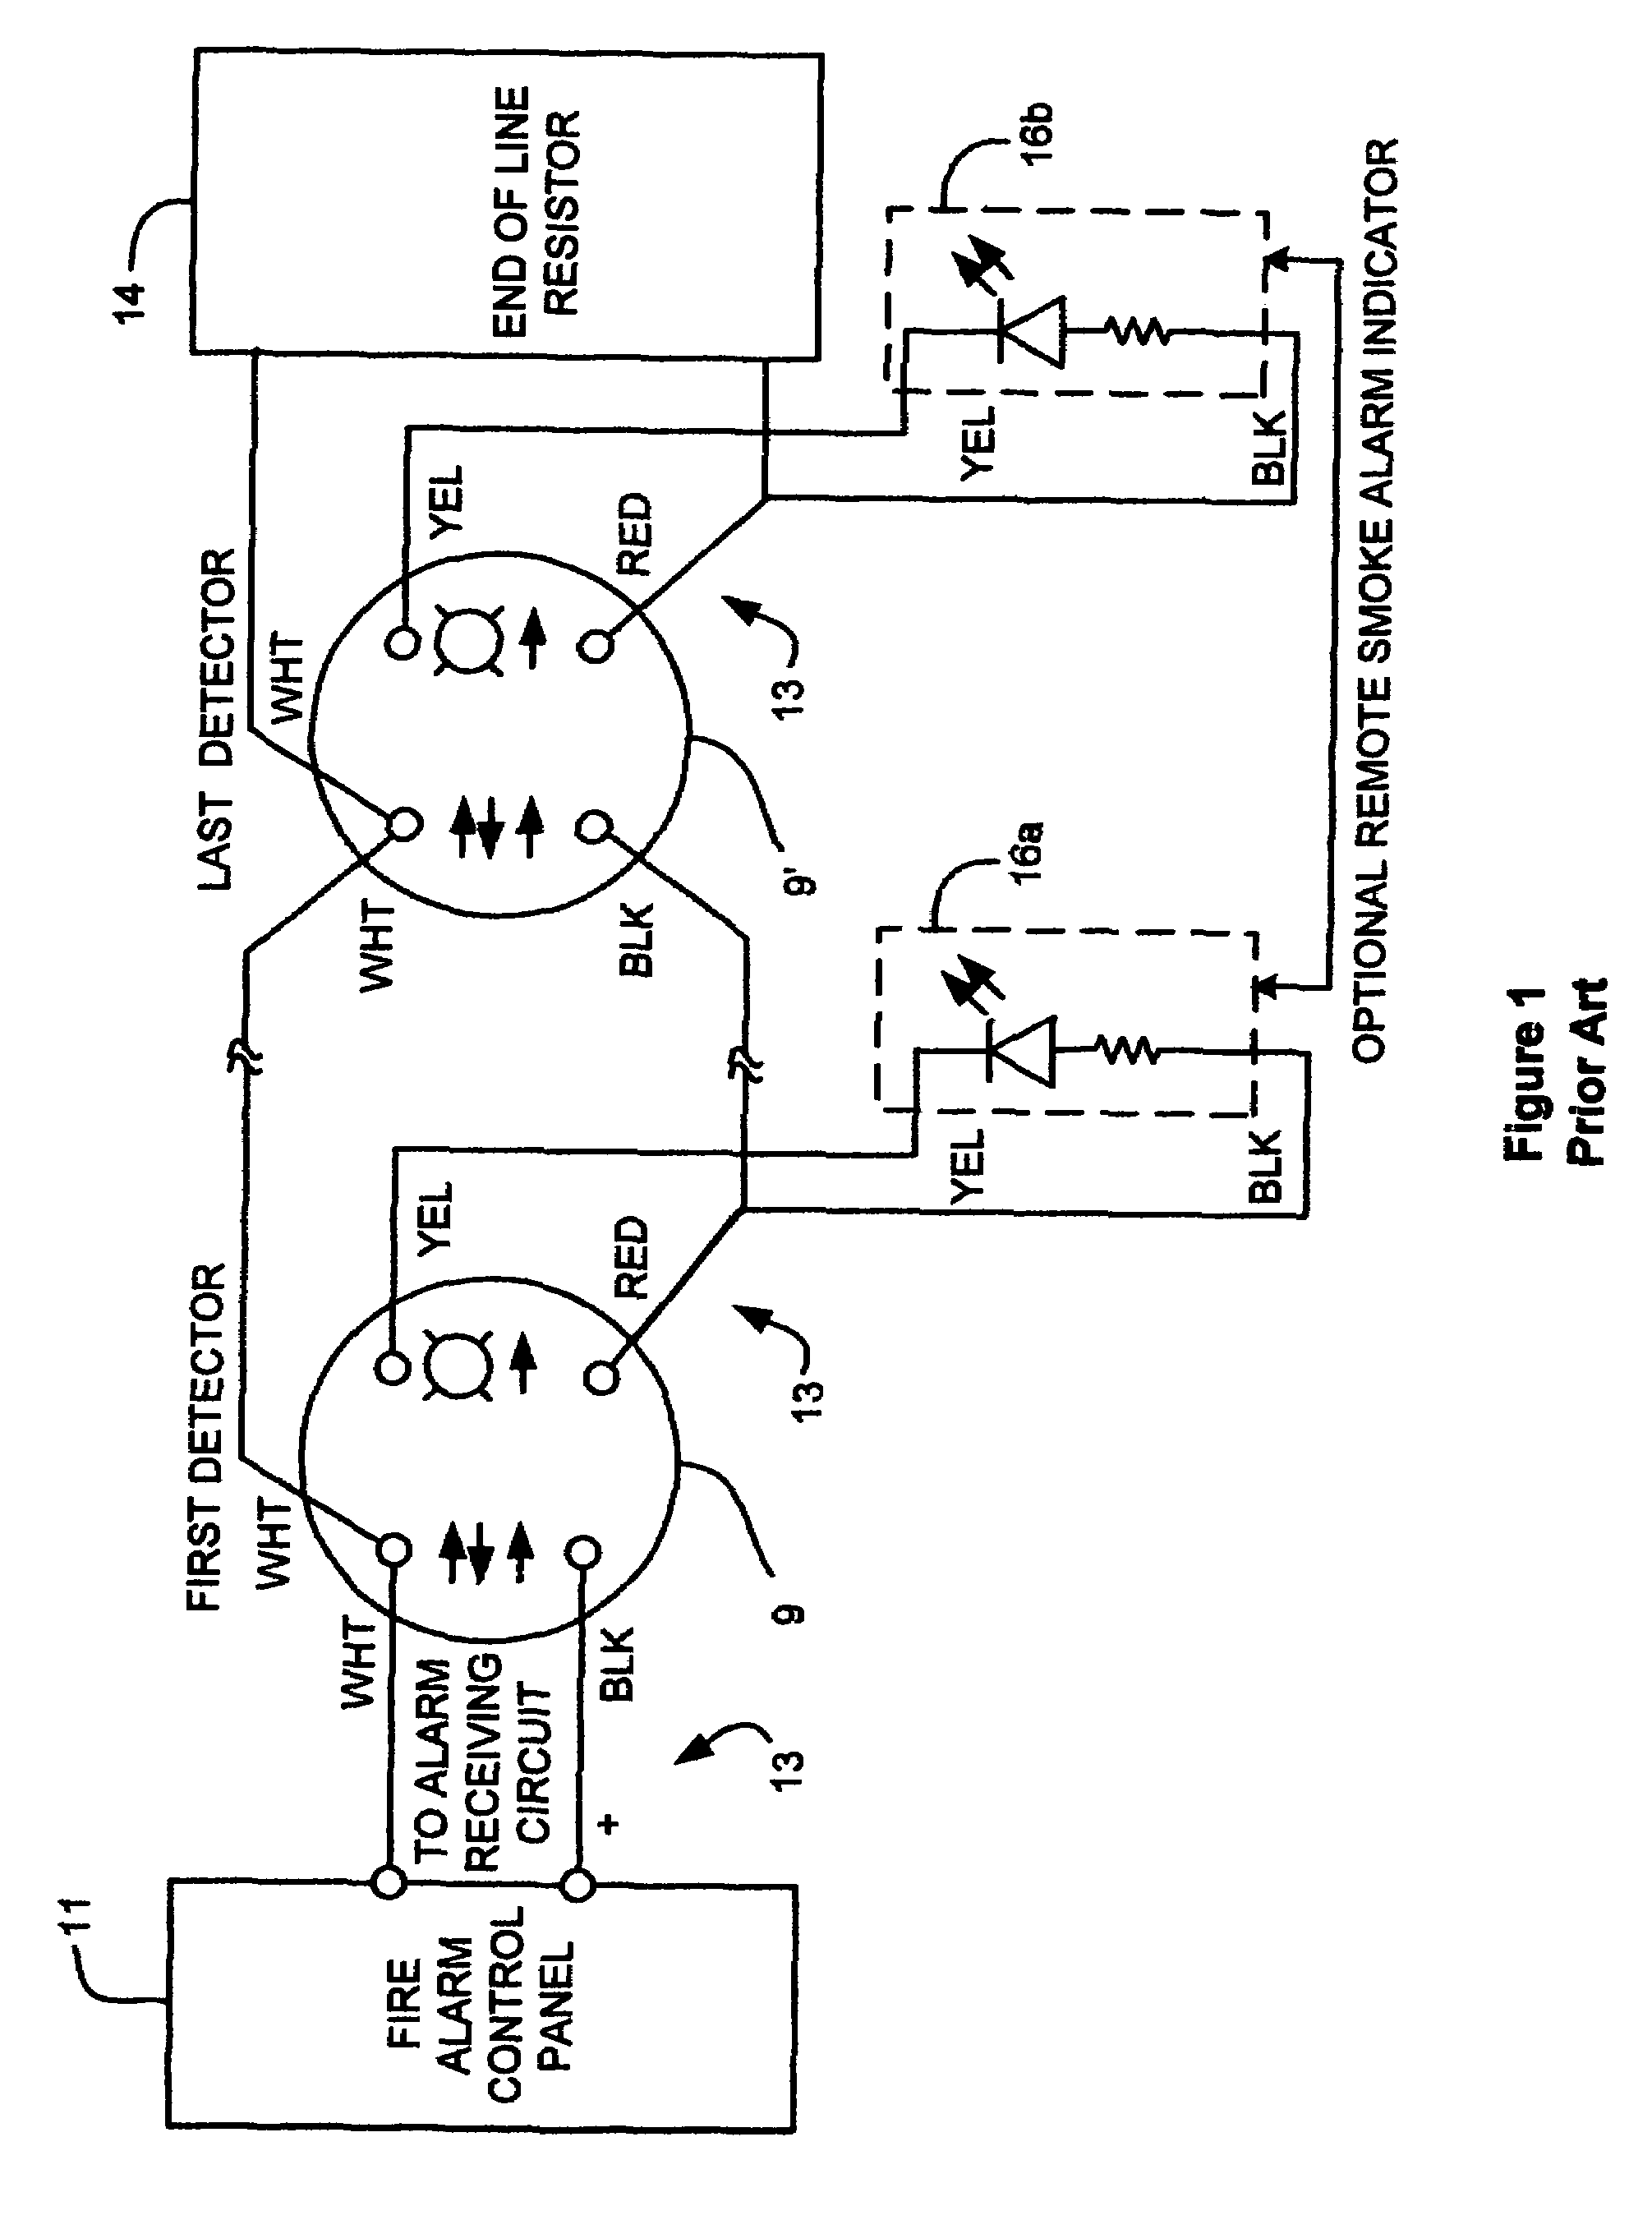 simplex 4002 wiring diagram